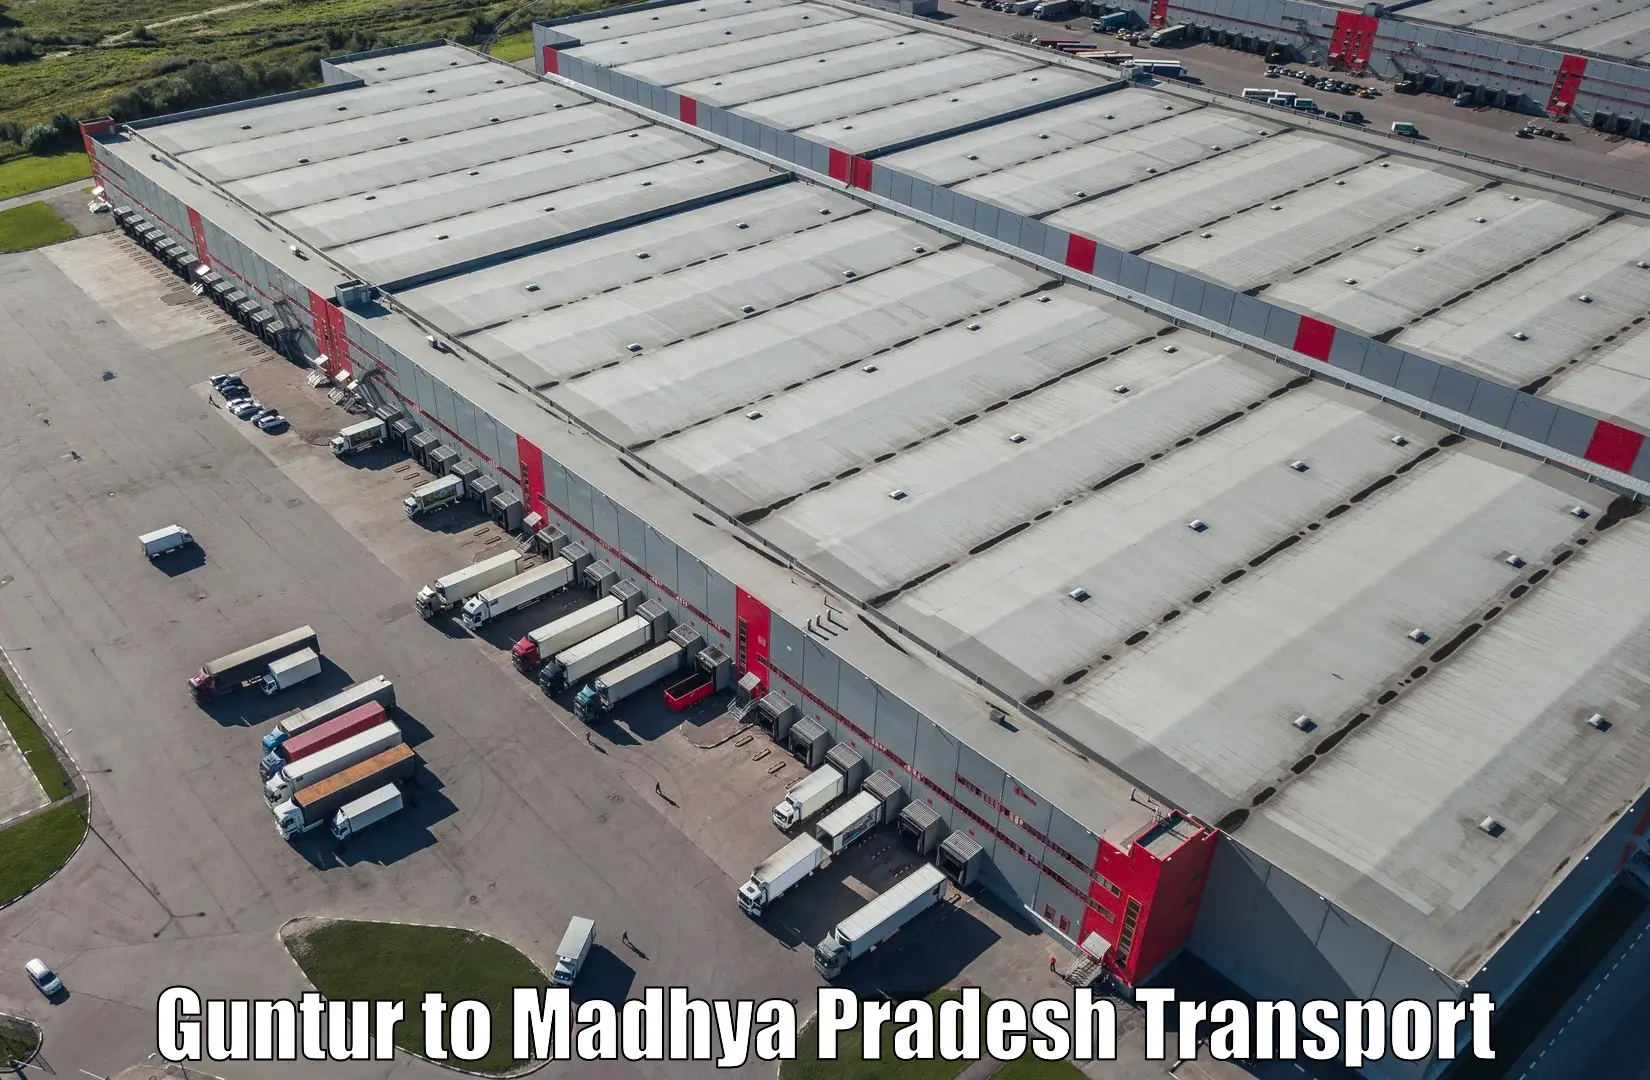 Road transport online services Guntur to Vidisha